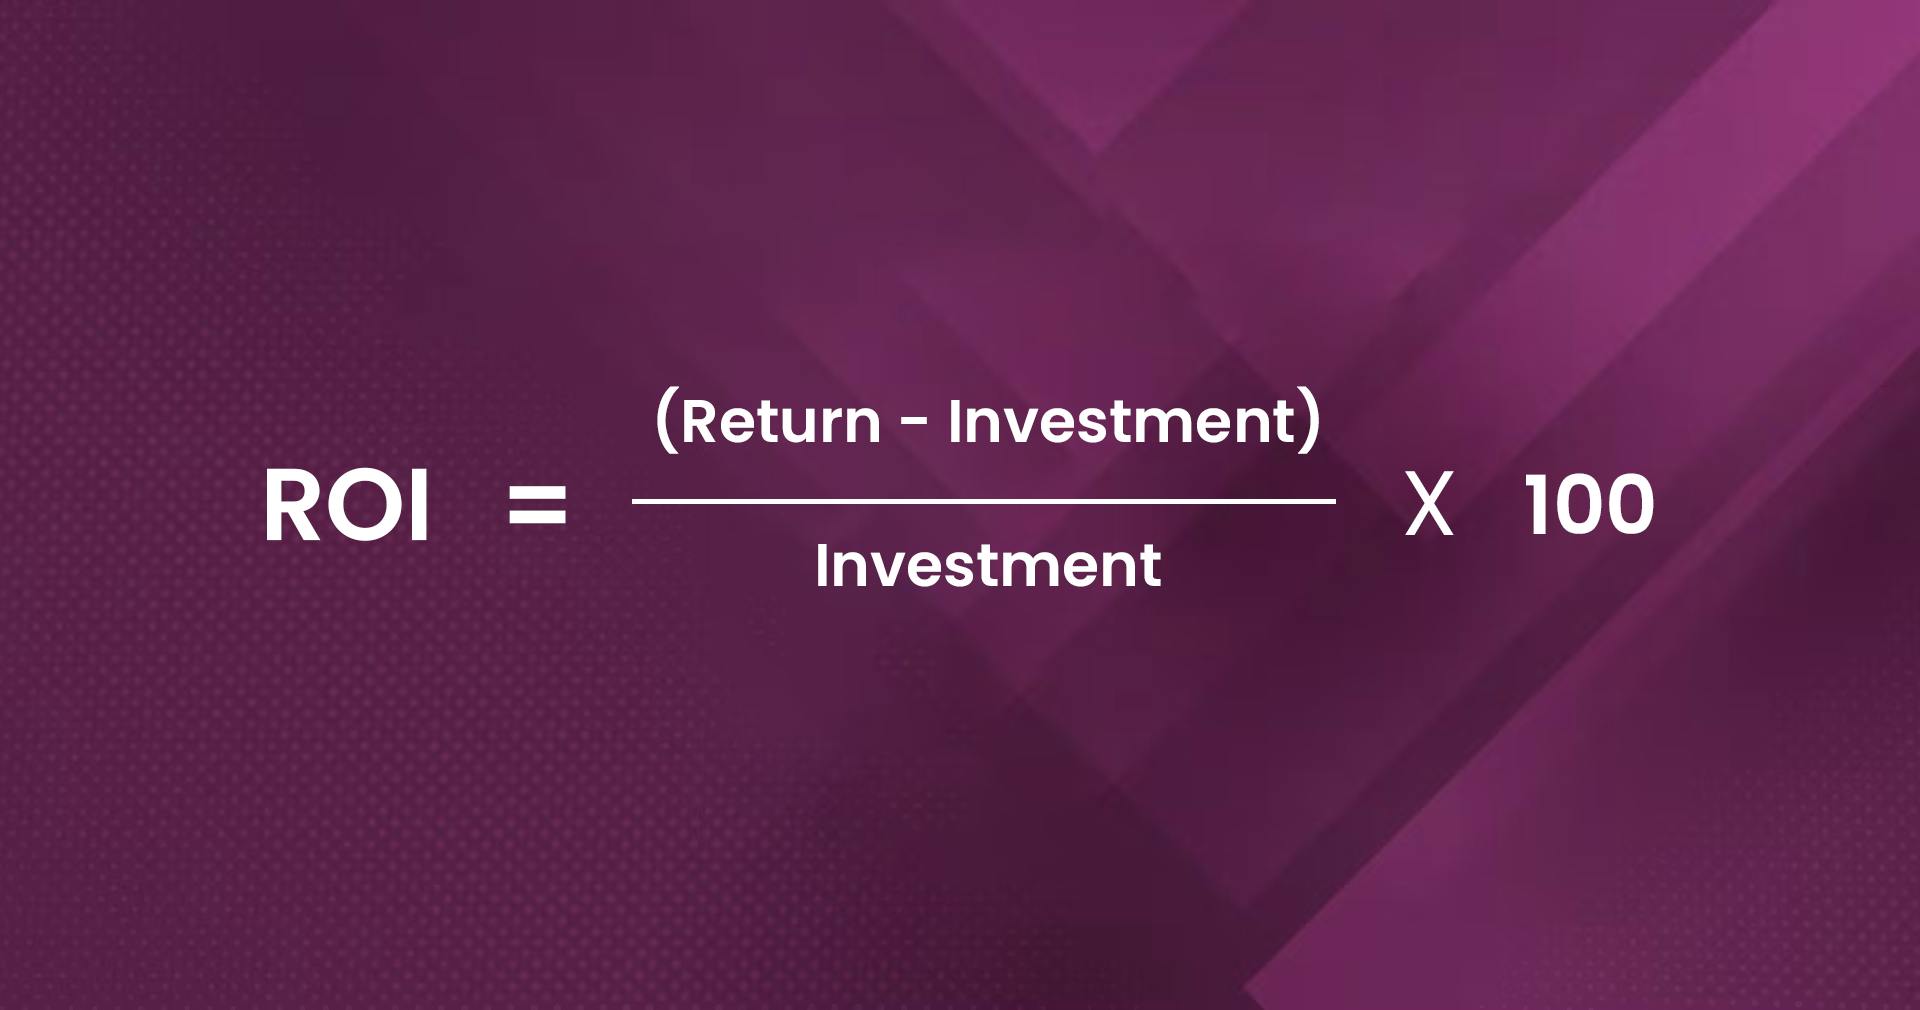 Return-Investment model formula